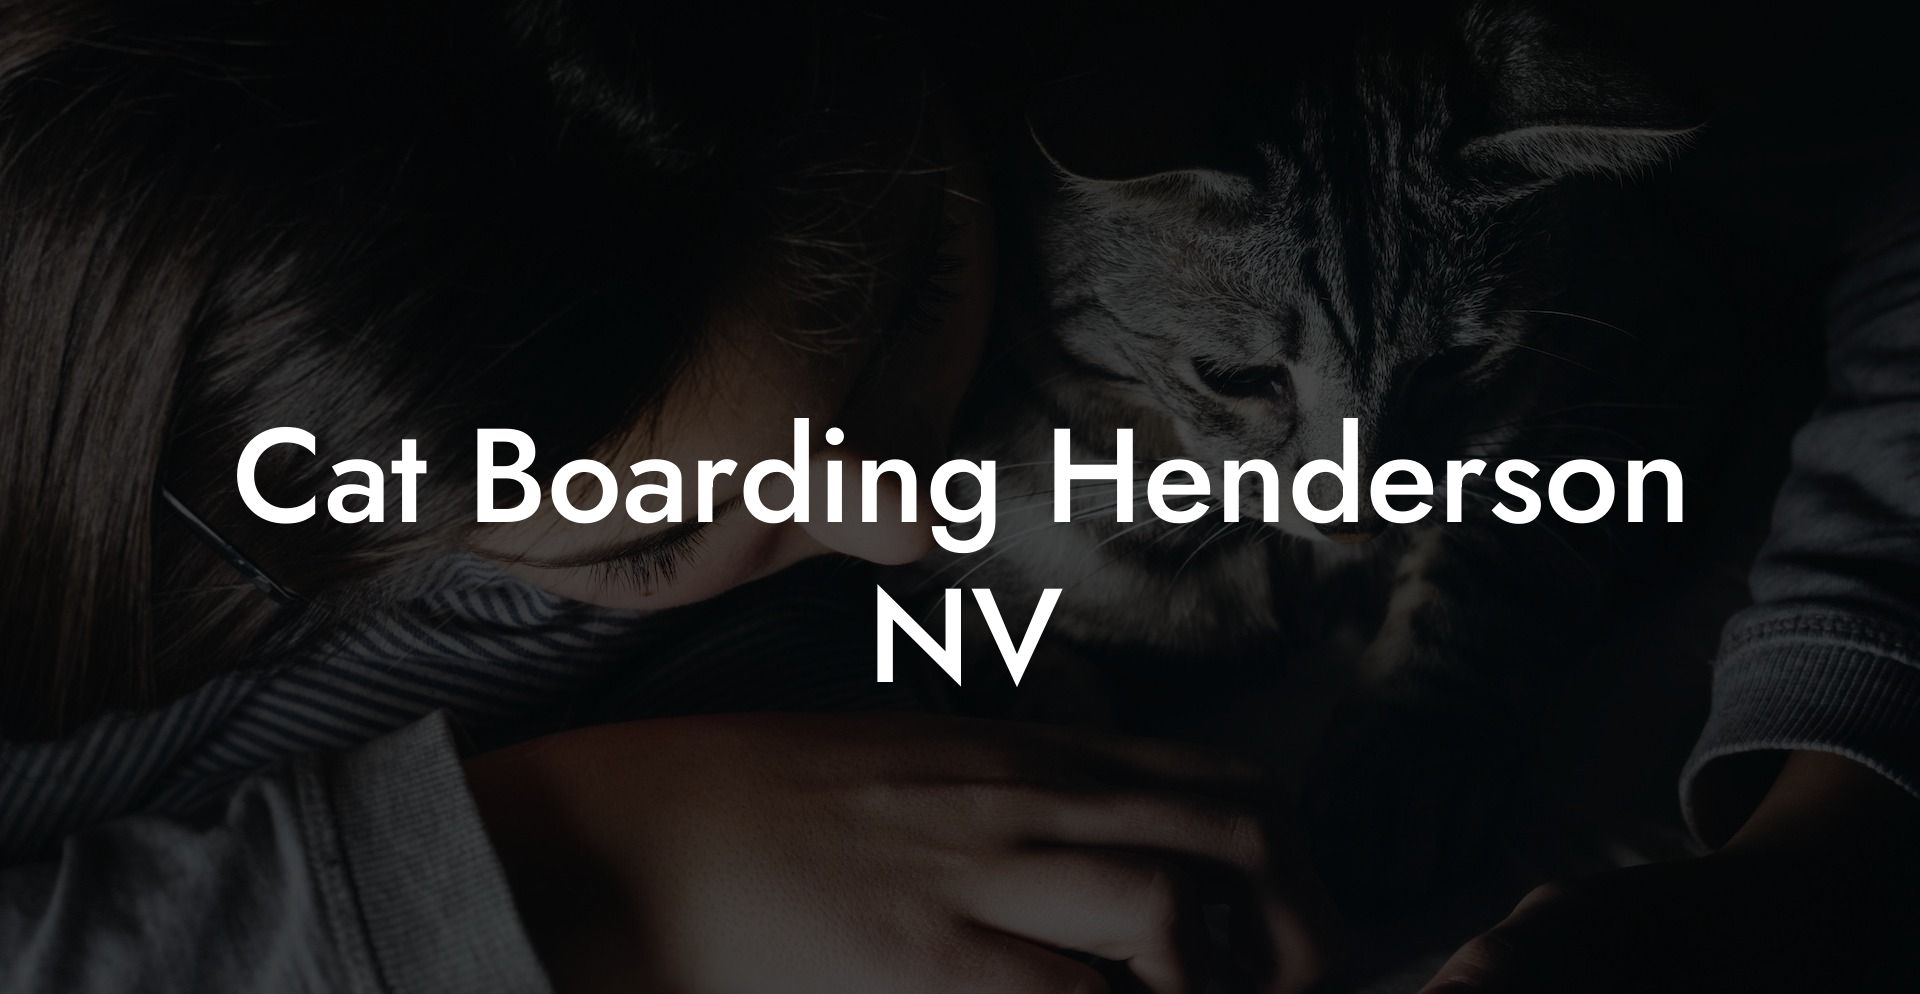 Cat Boarding Henderson NV